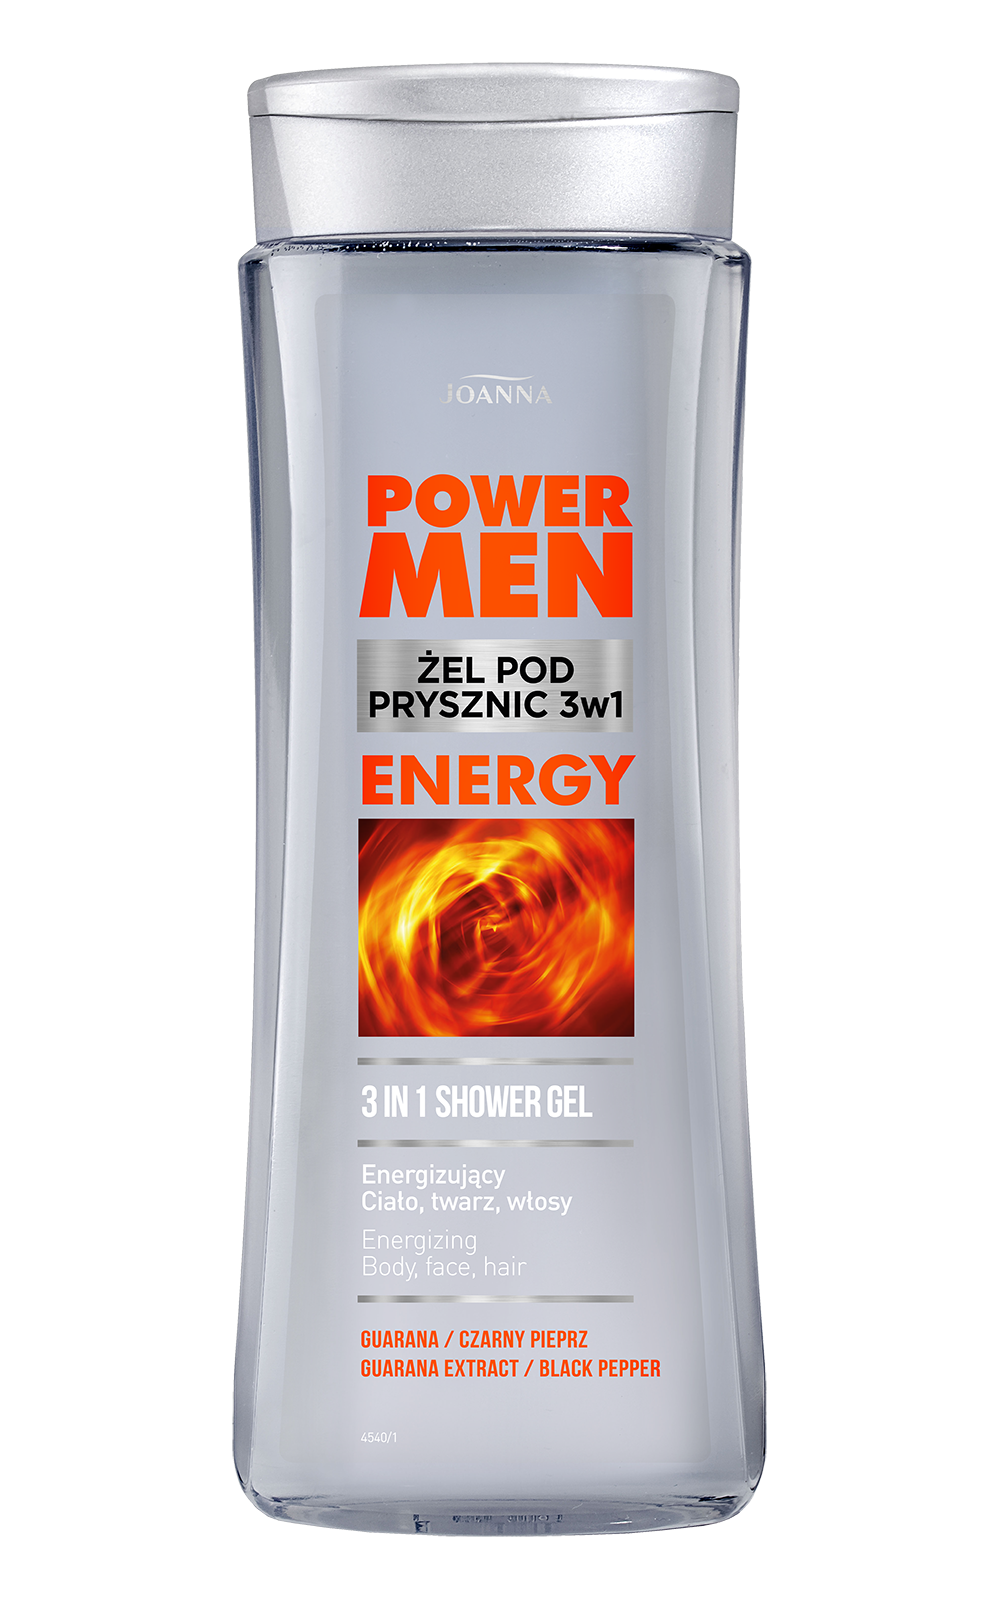 Żel pod prysznic 3w1 Energy Joanna Power Men